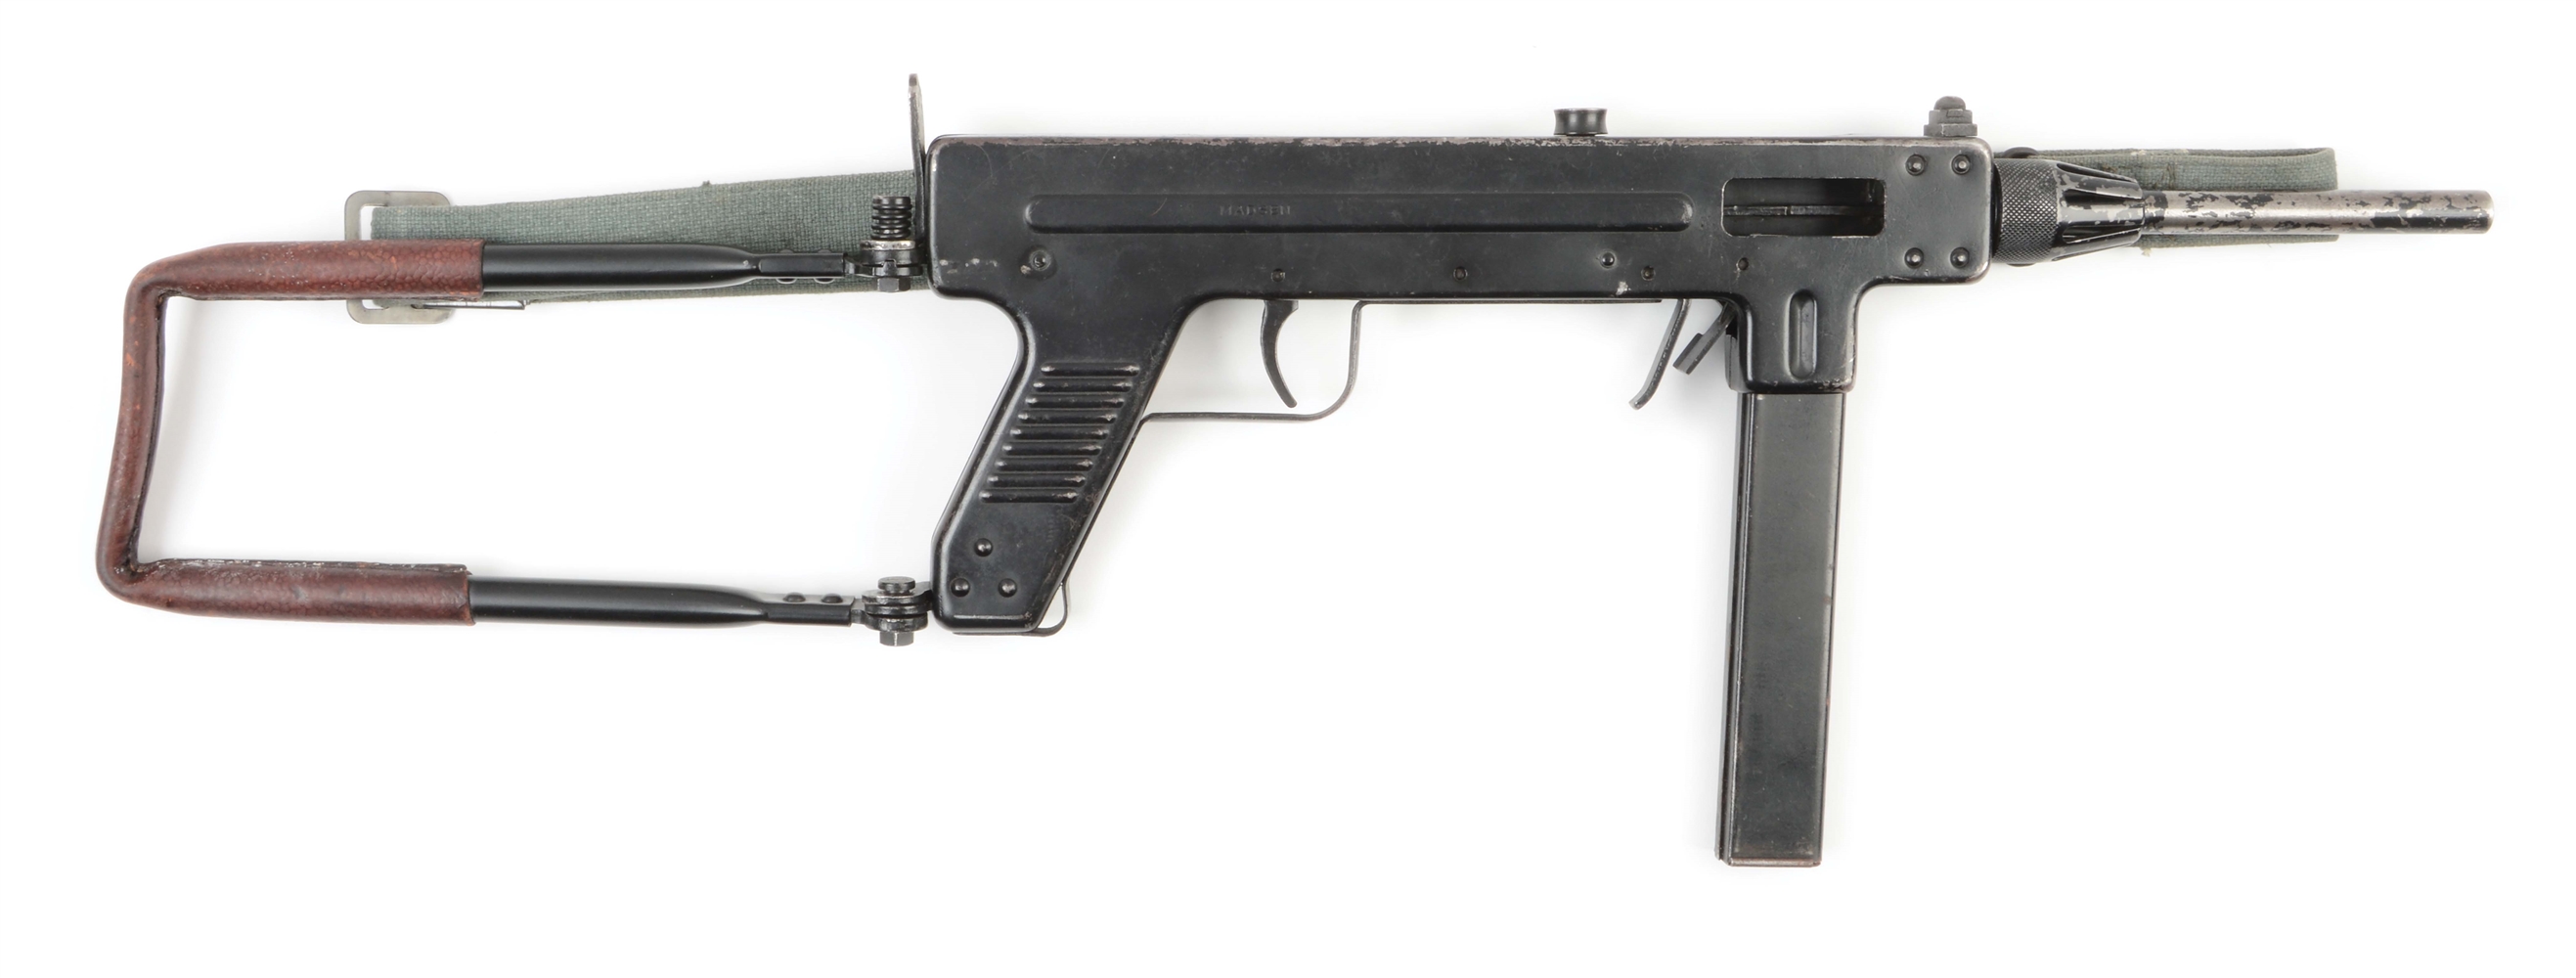 (N) HANDY DANISH MADSEN M-50 MACHINE GUN (PRE-86 DEALER SAMPLE).